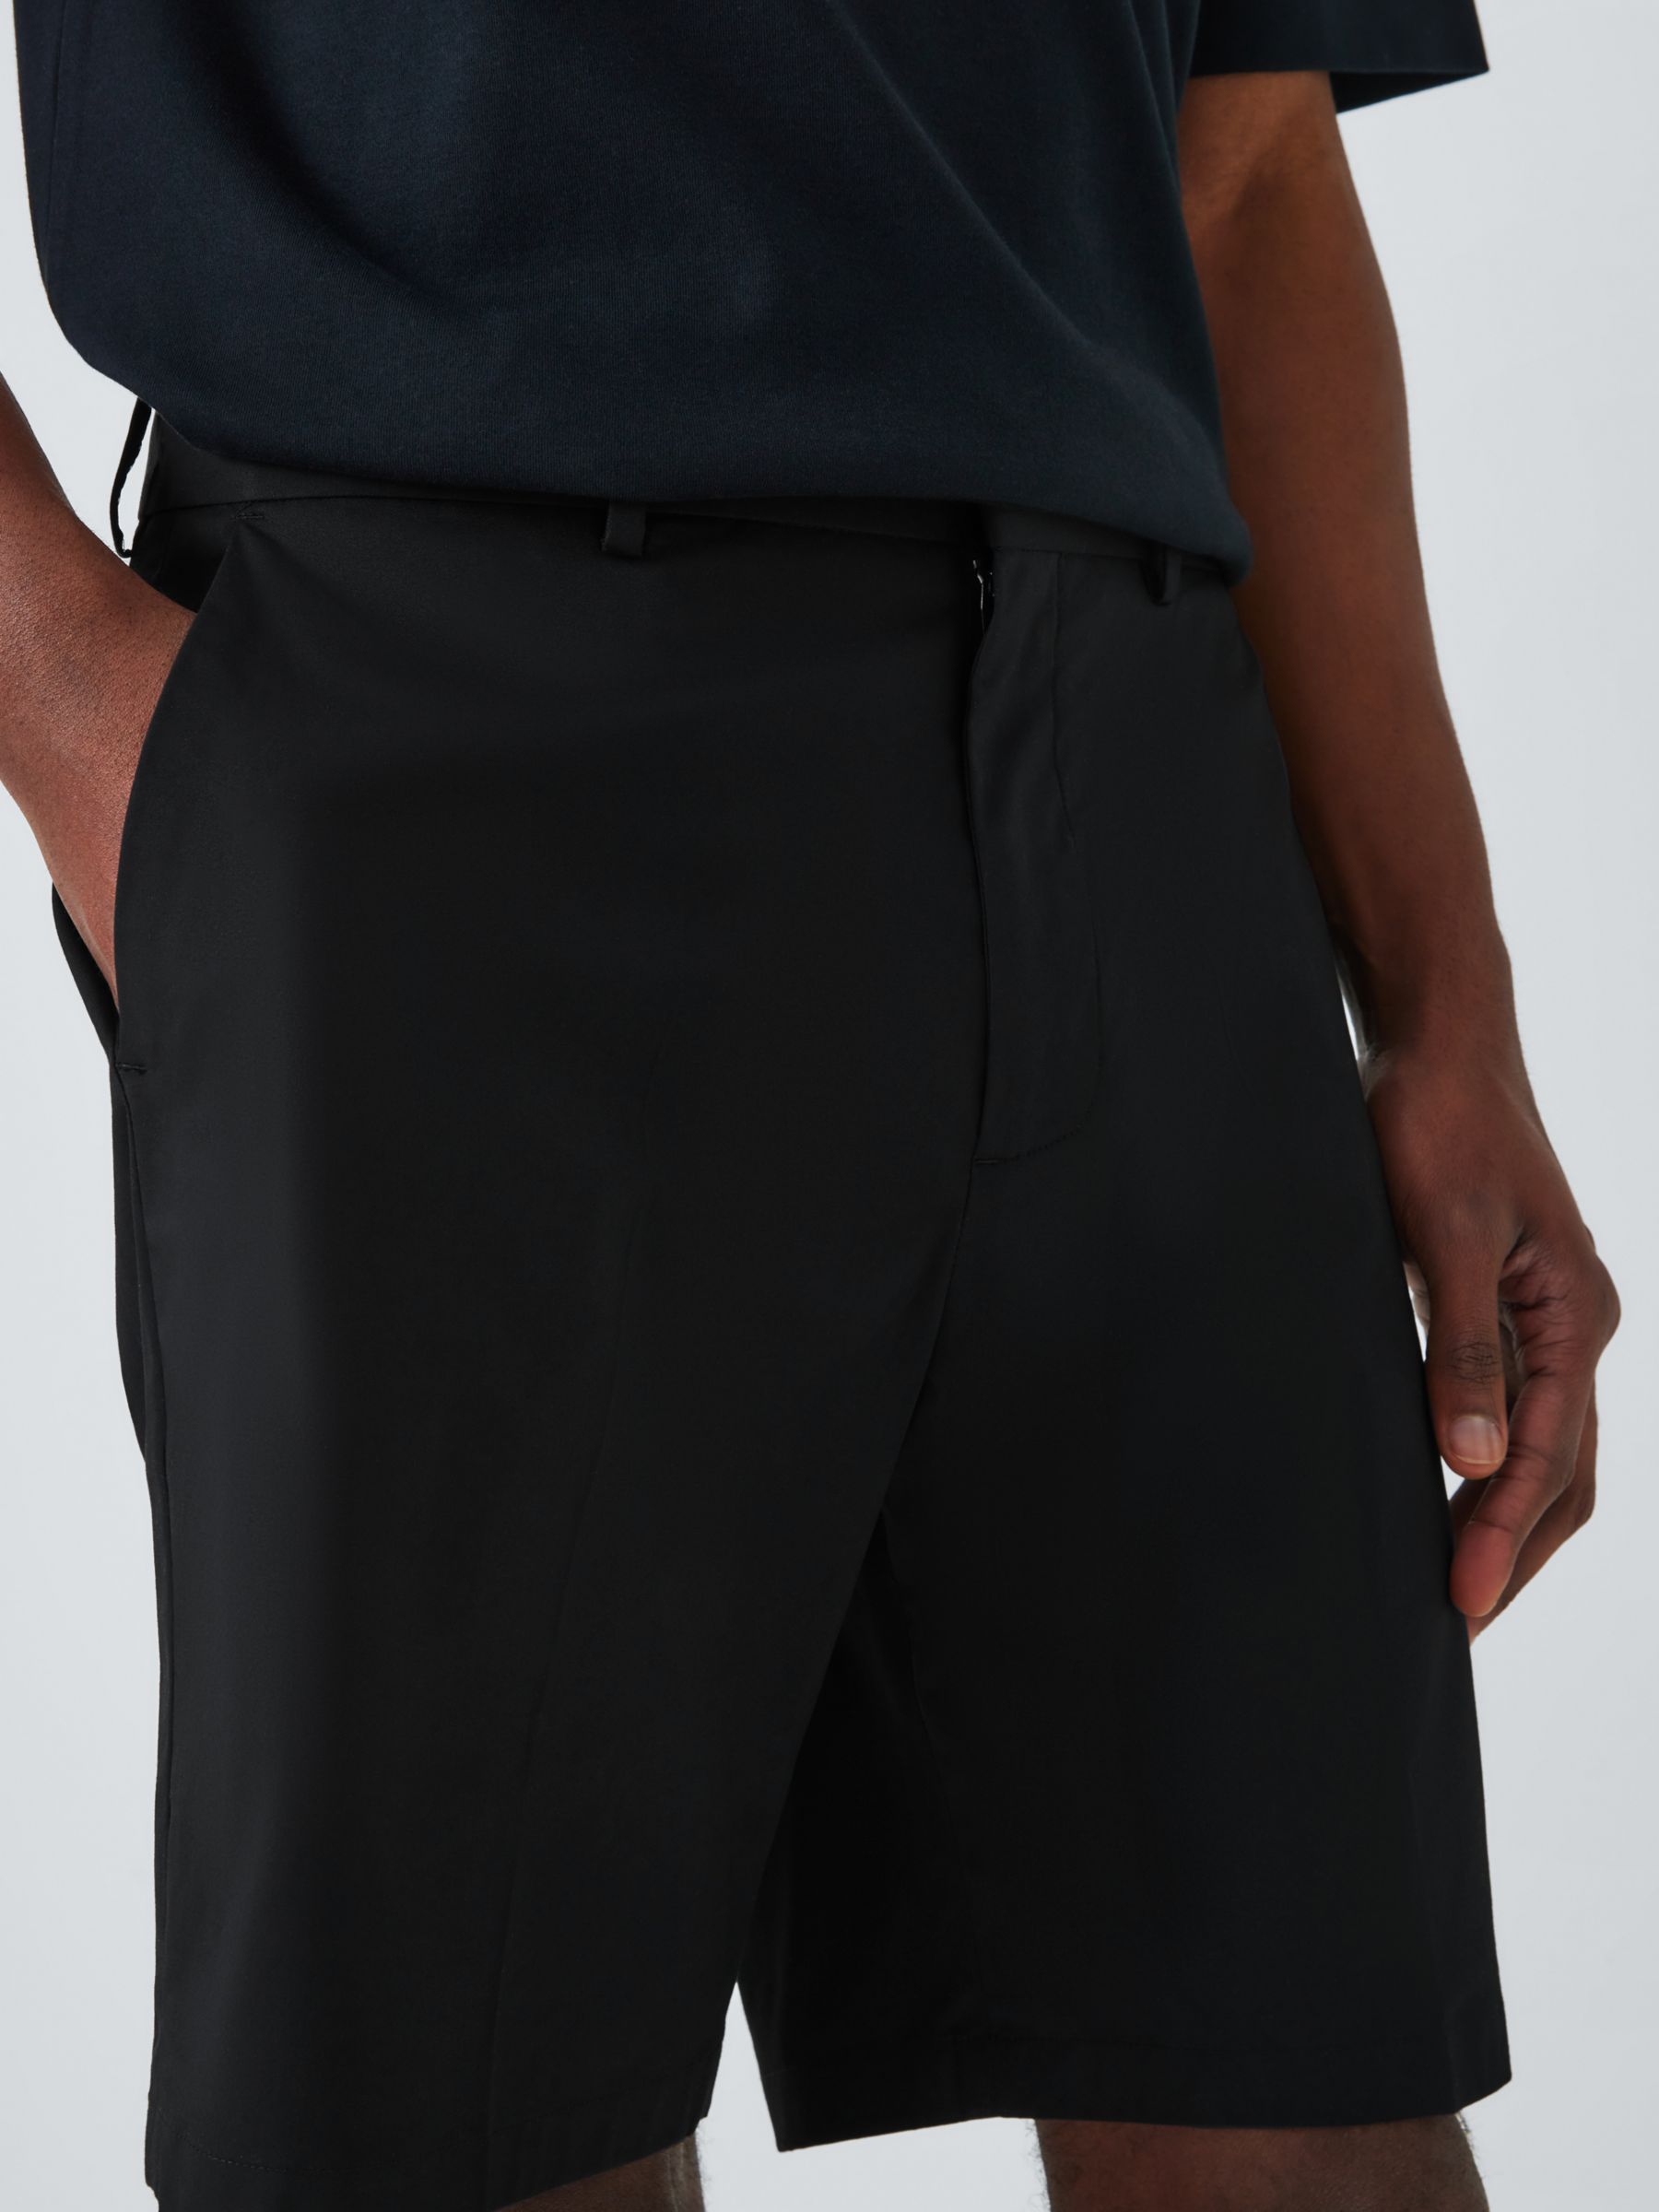 Kin Cotton Blend Chino Shorts, Black Beauty, 34R